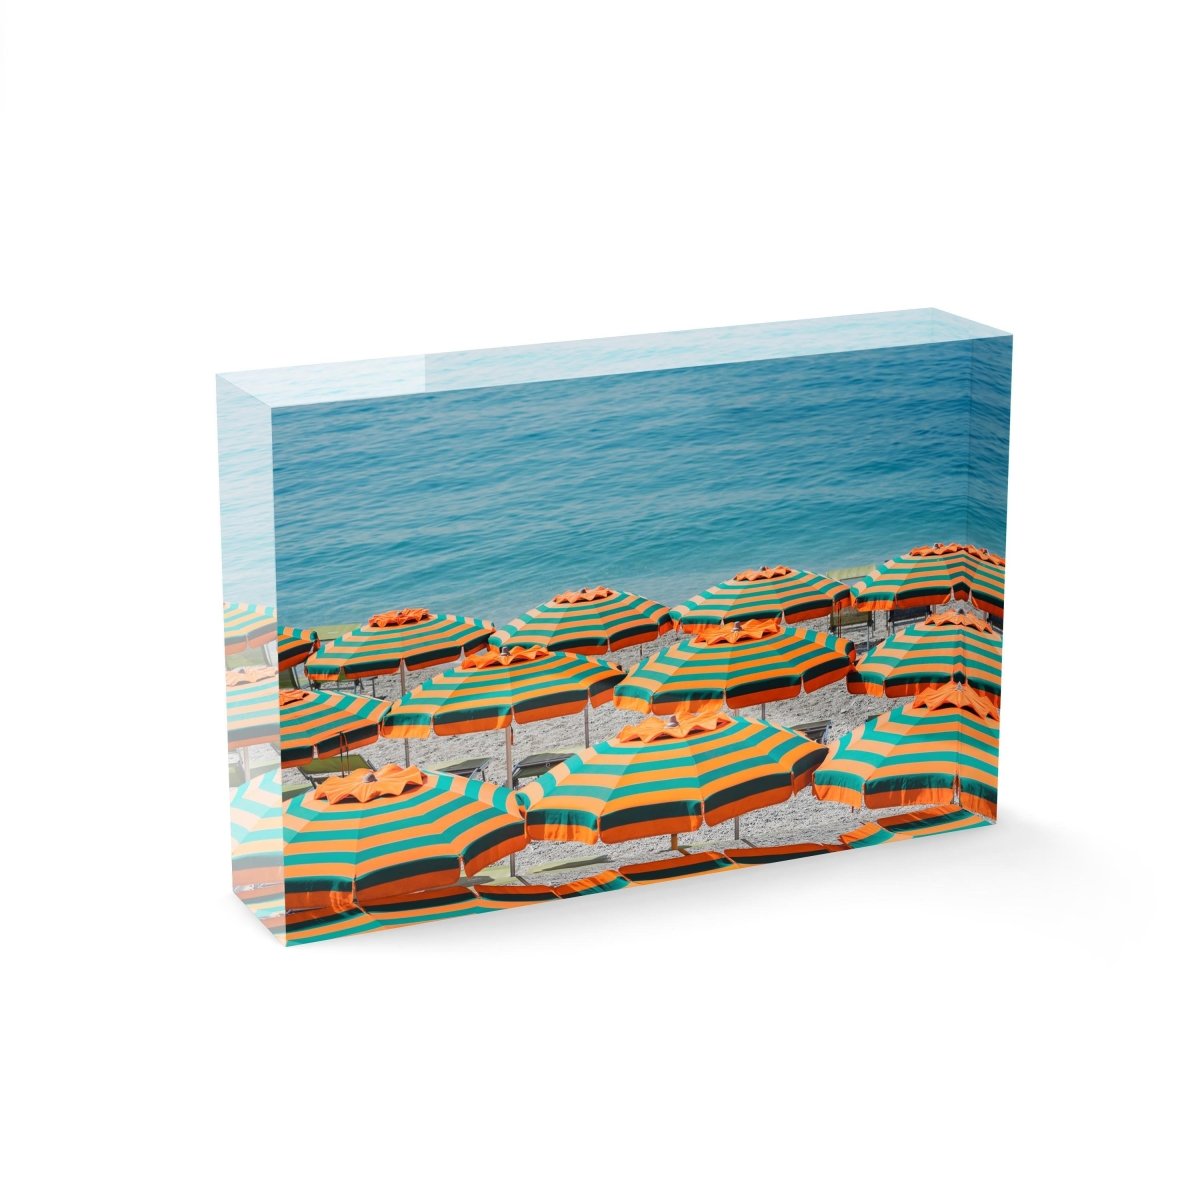 Rows of striped orange umbrellas and turquoise sea in Cinque Terre